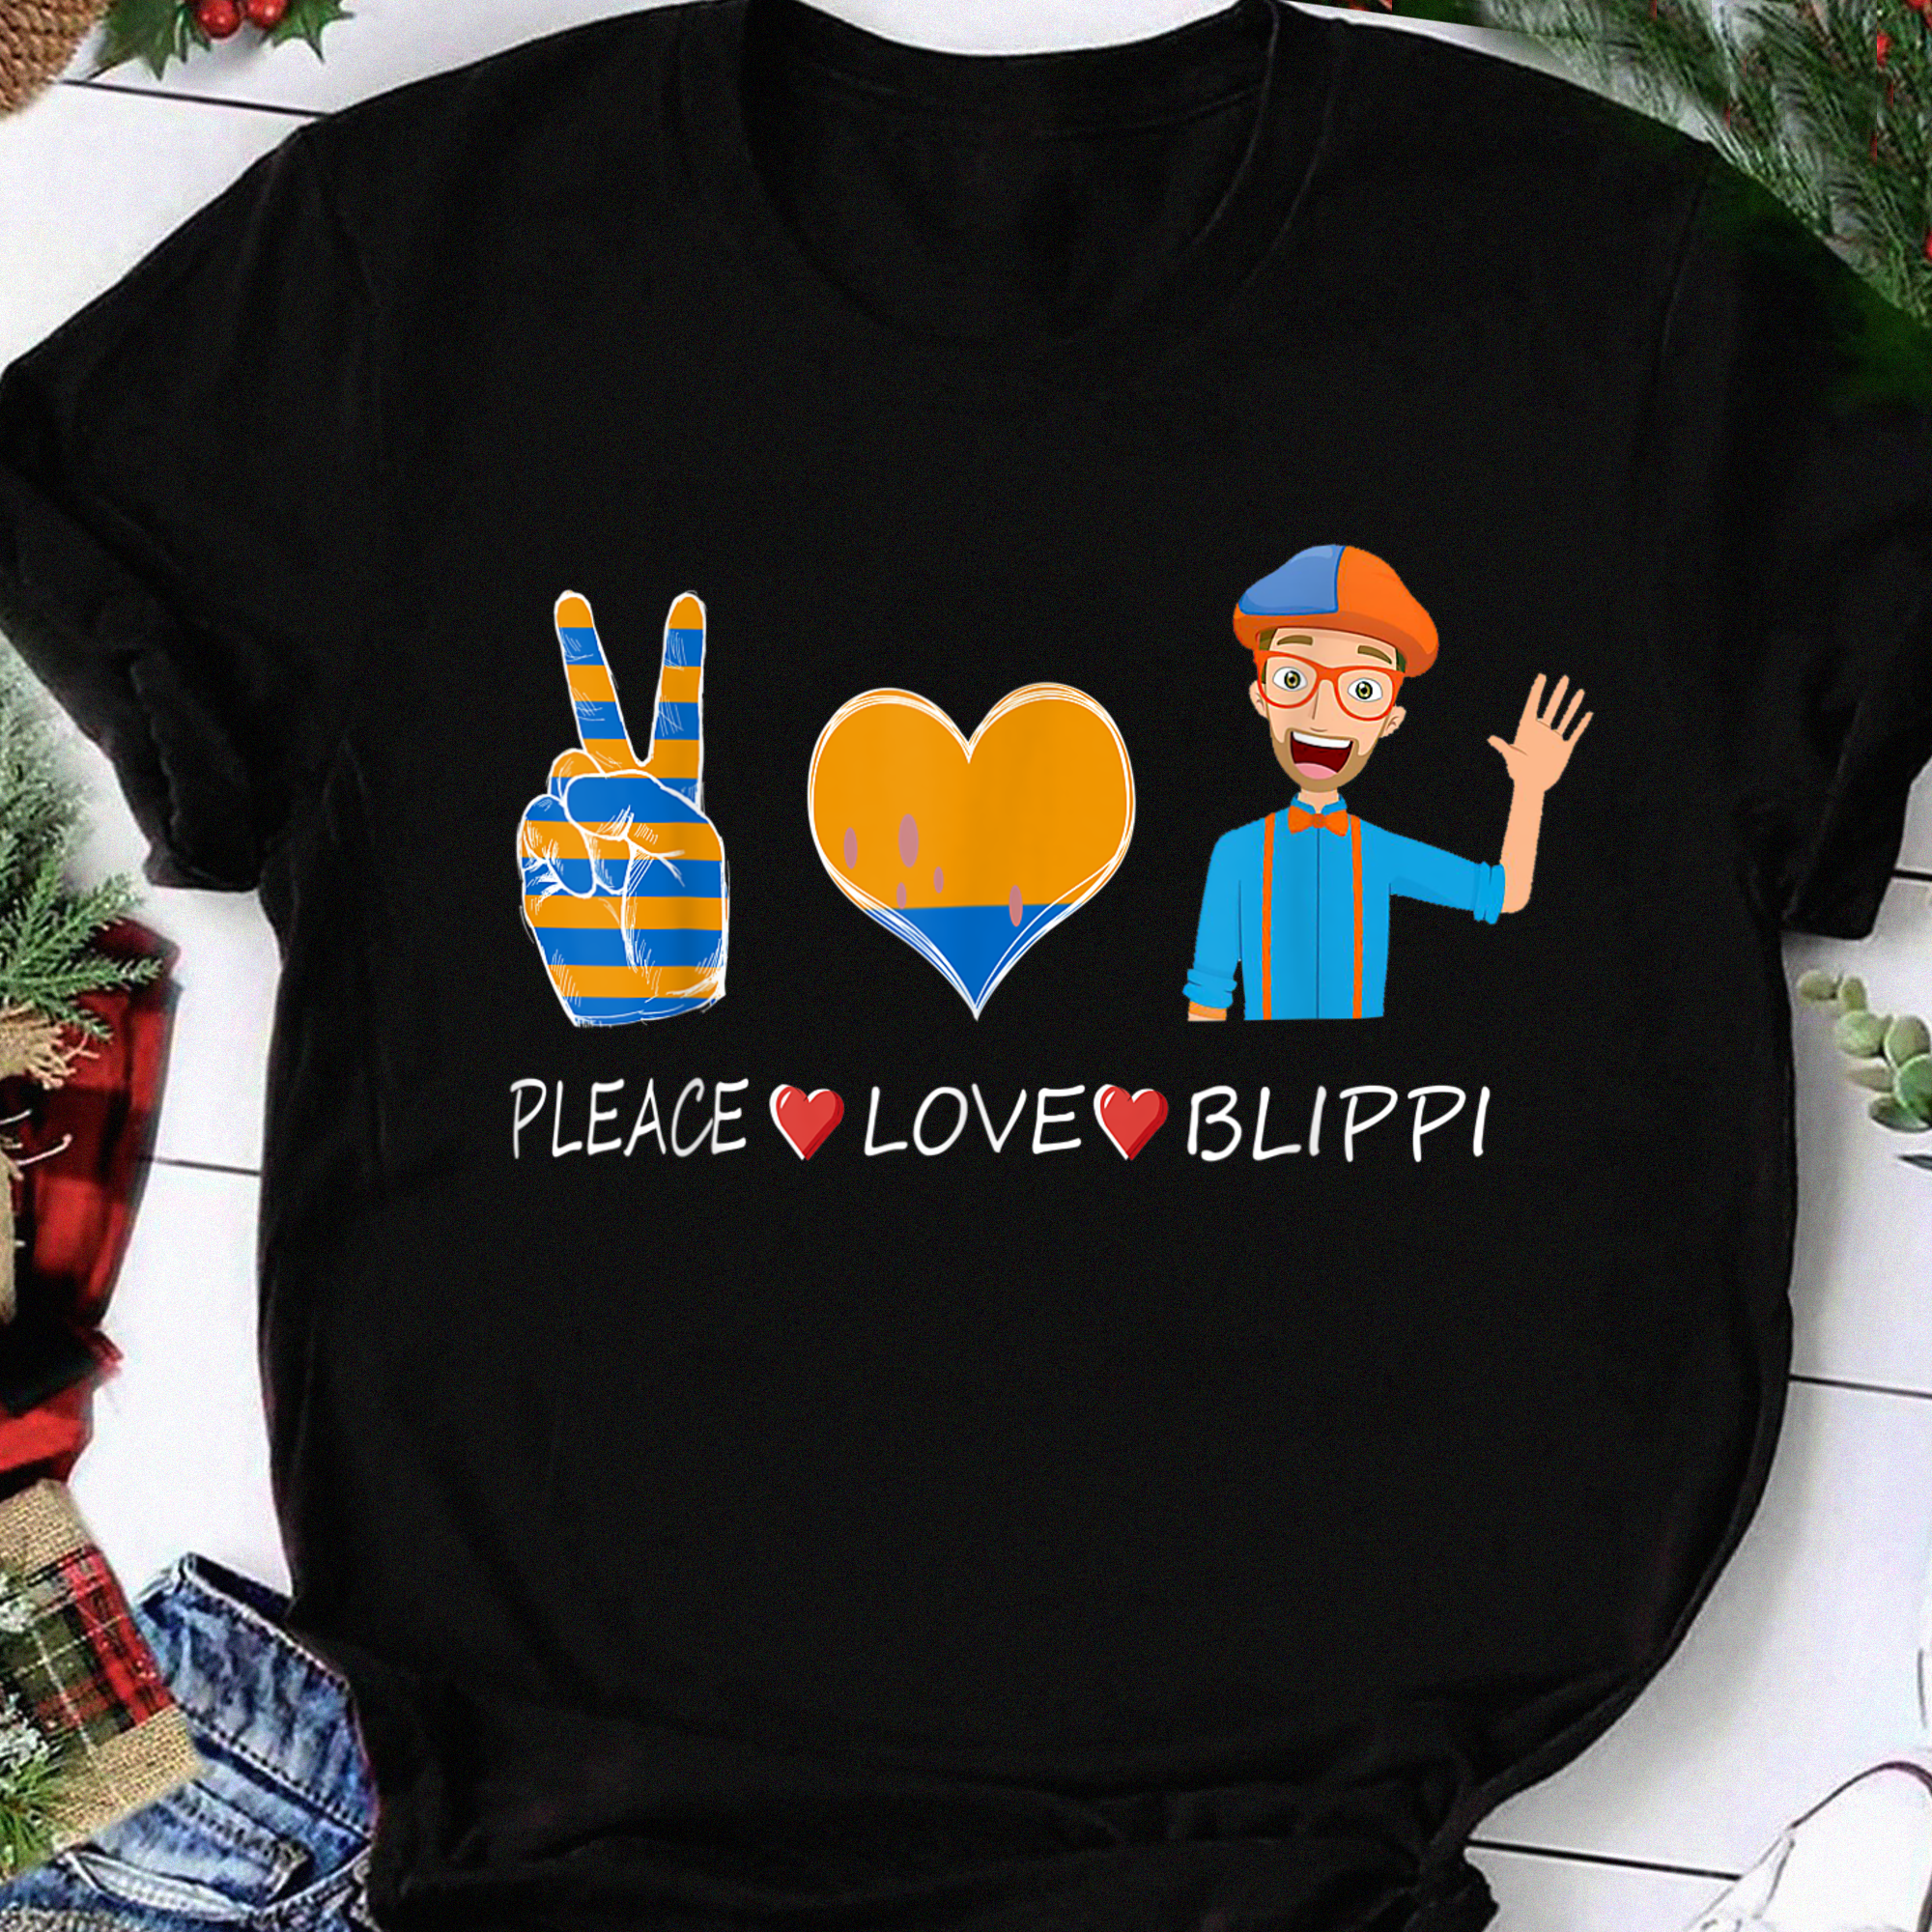 Peace Love Blippi Shirt, Blippi Birthday T-Shirt, Kids Blippis T-Shirt, Blippi shirt gift